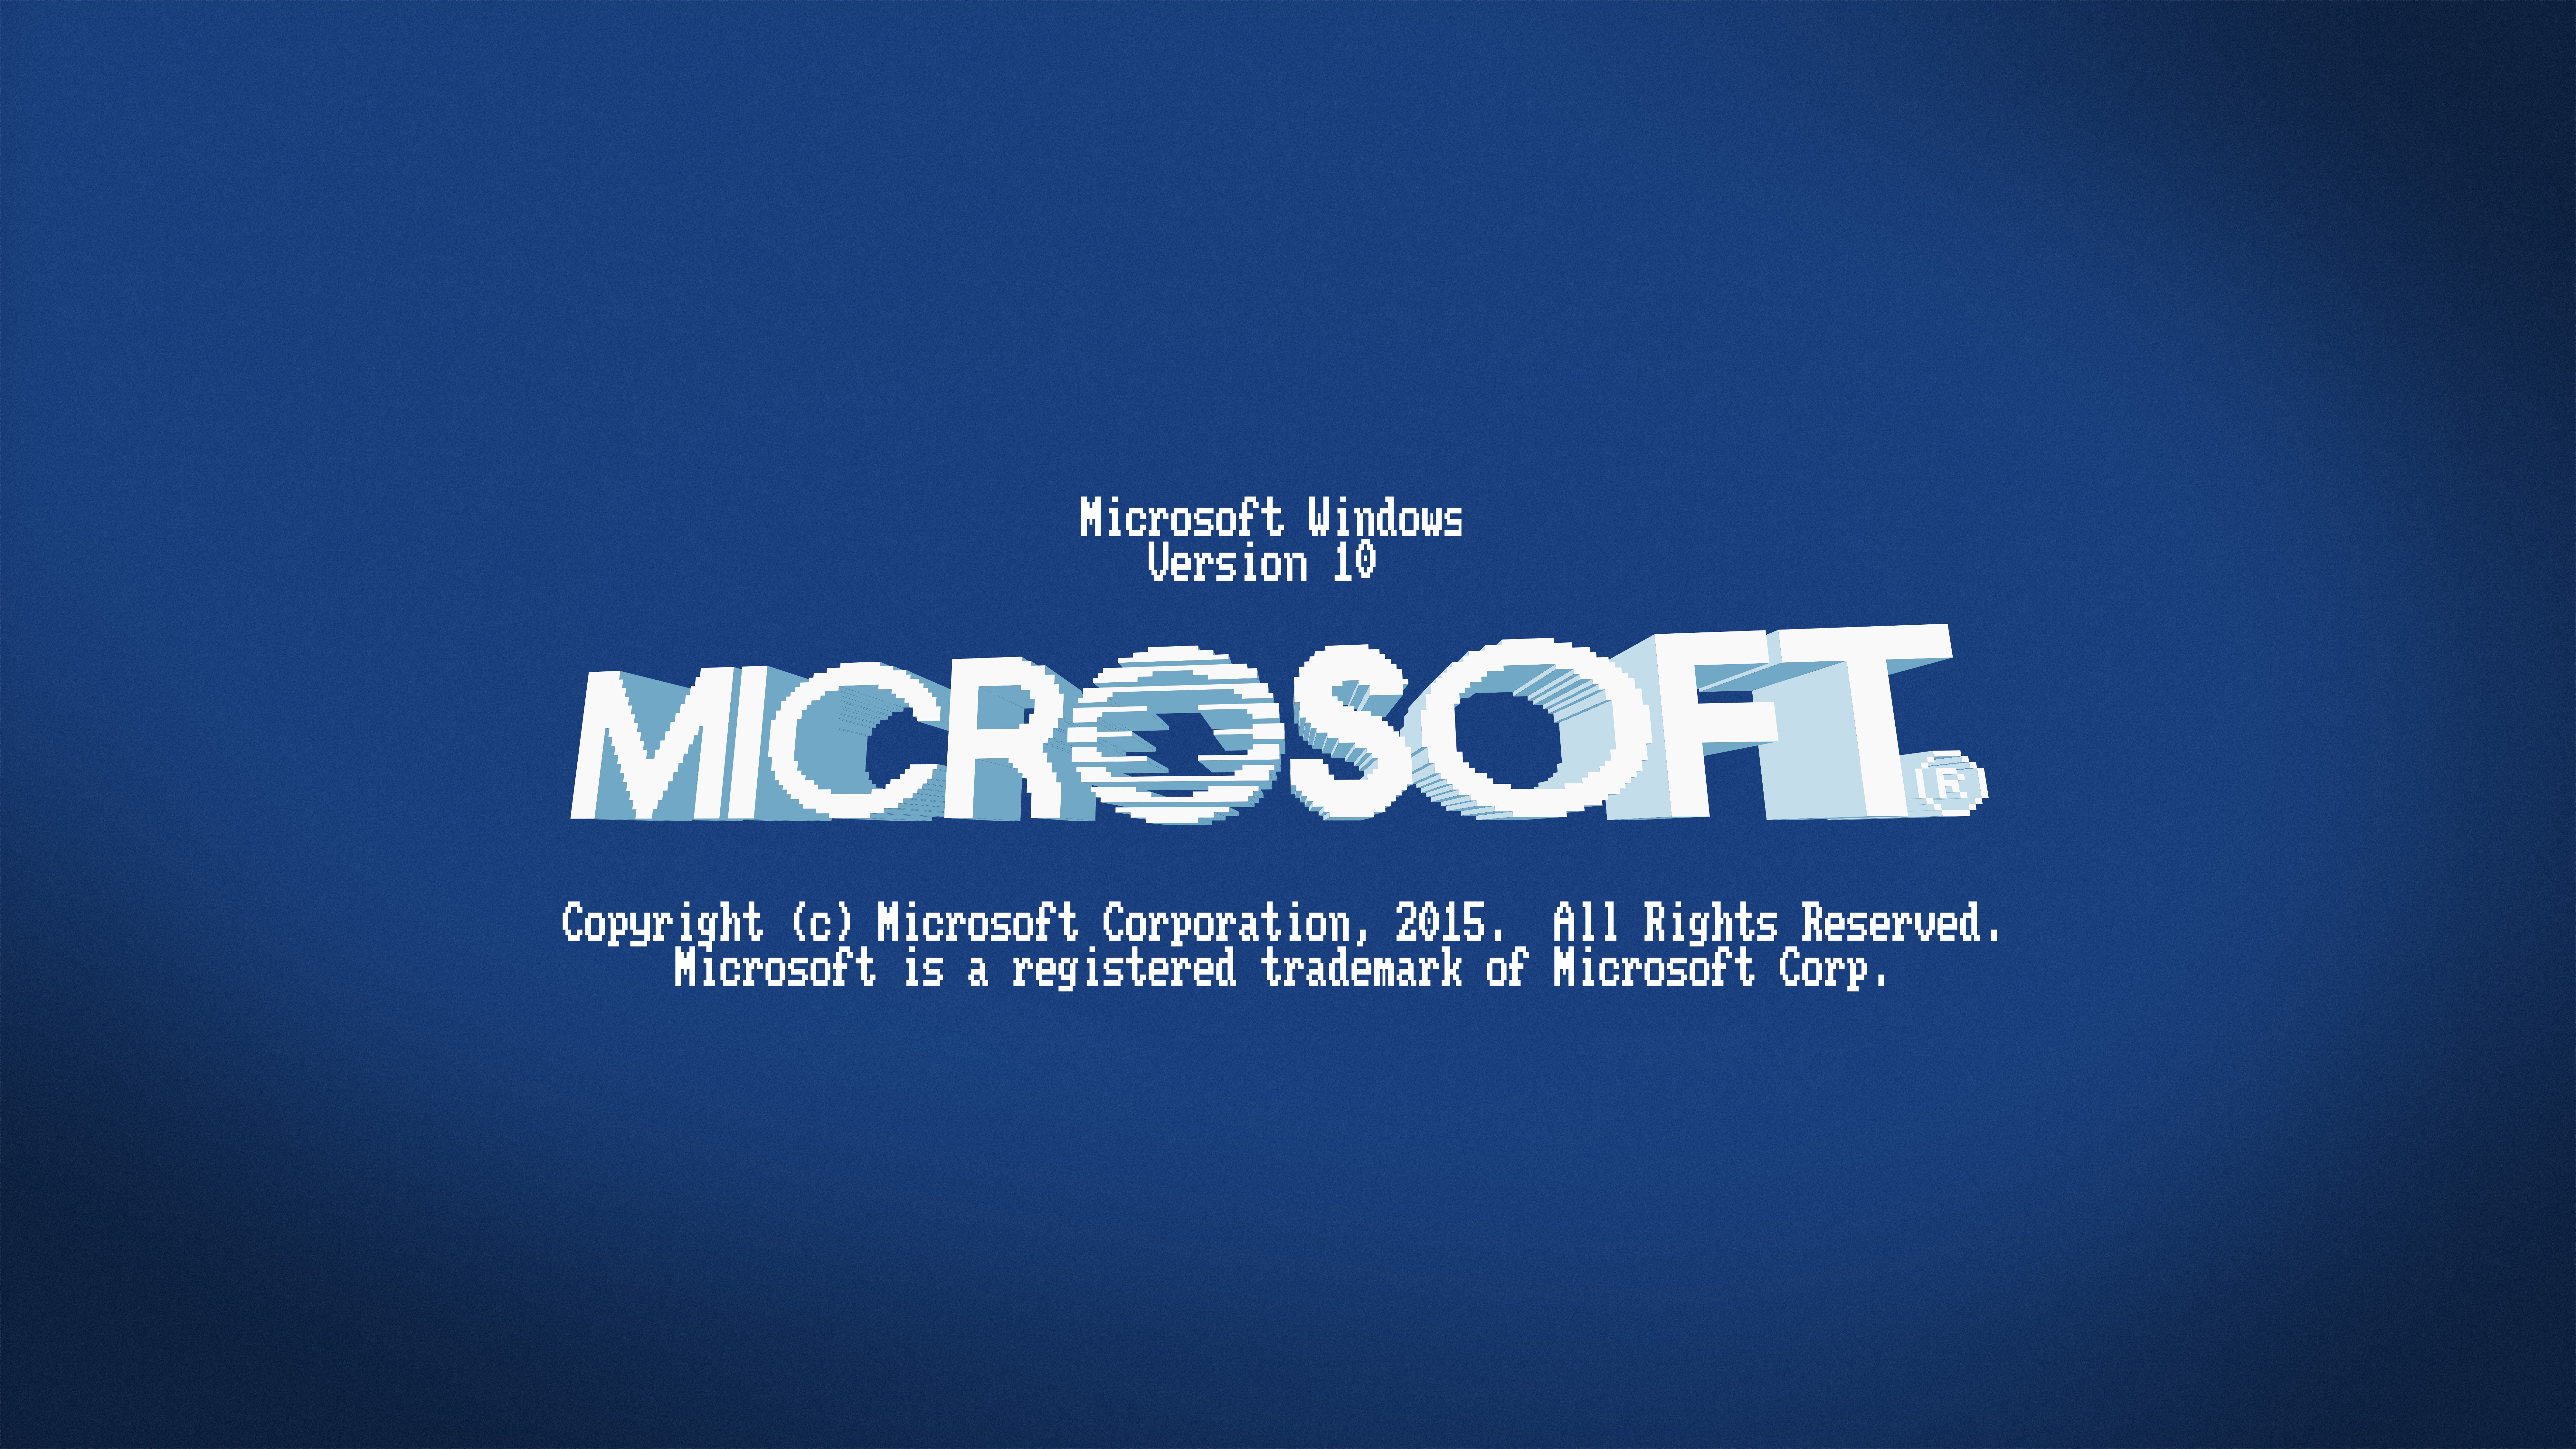 Microsoft Windows, Windows 10 Anniversary Wallpaper